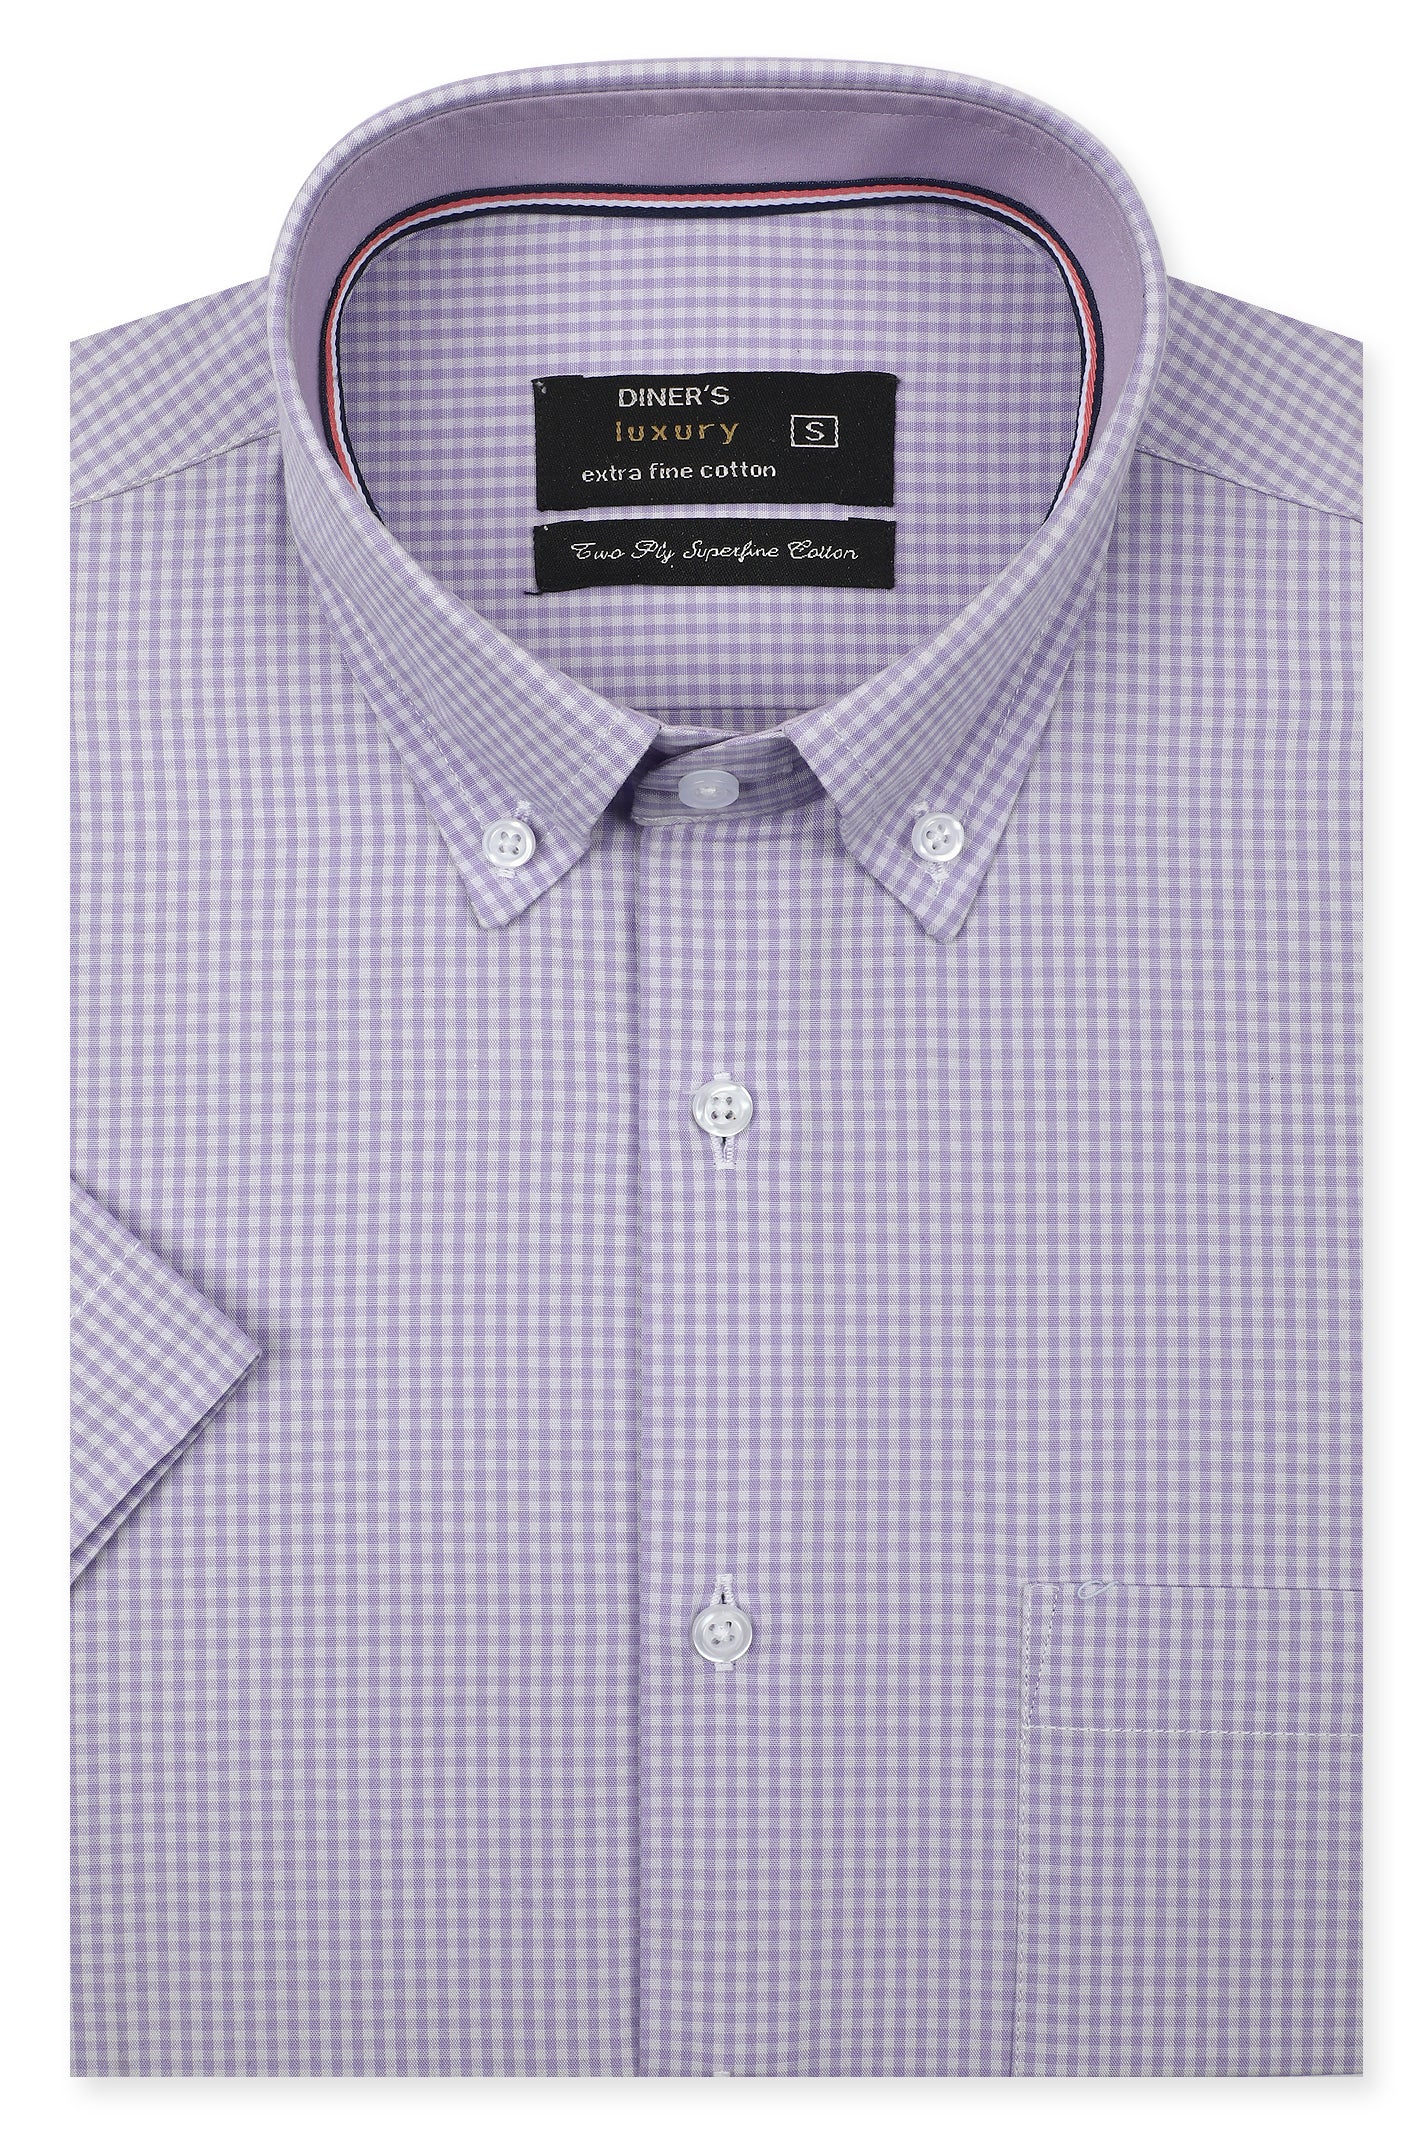 Formal Shirt for Men (Half Sleeves) - Diners